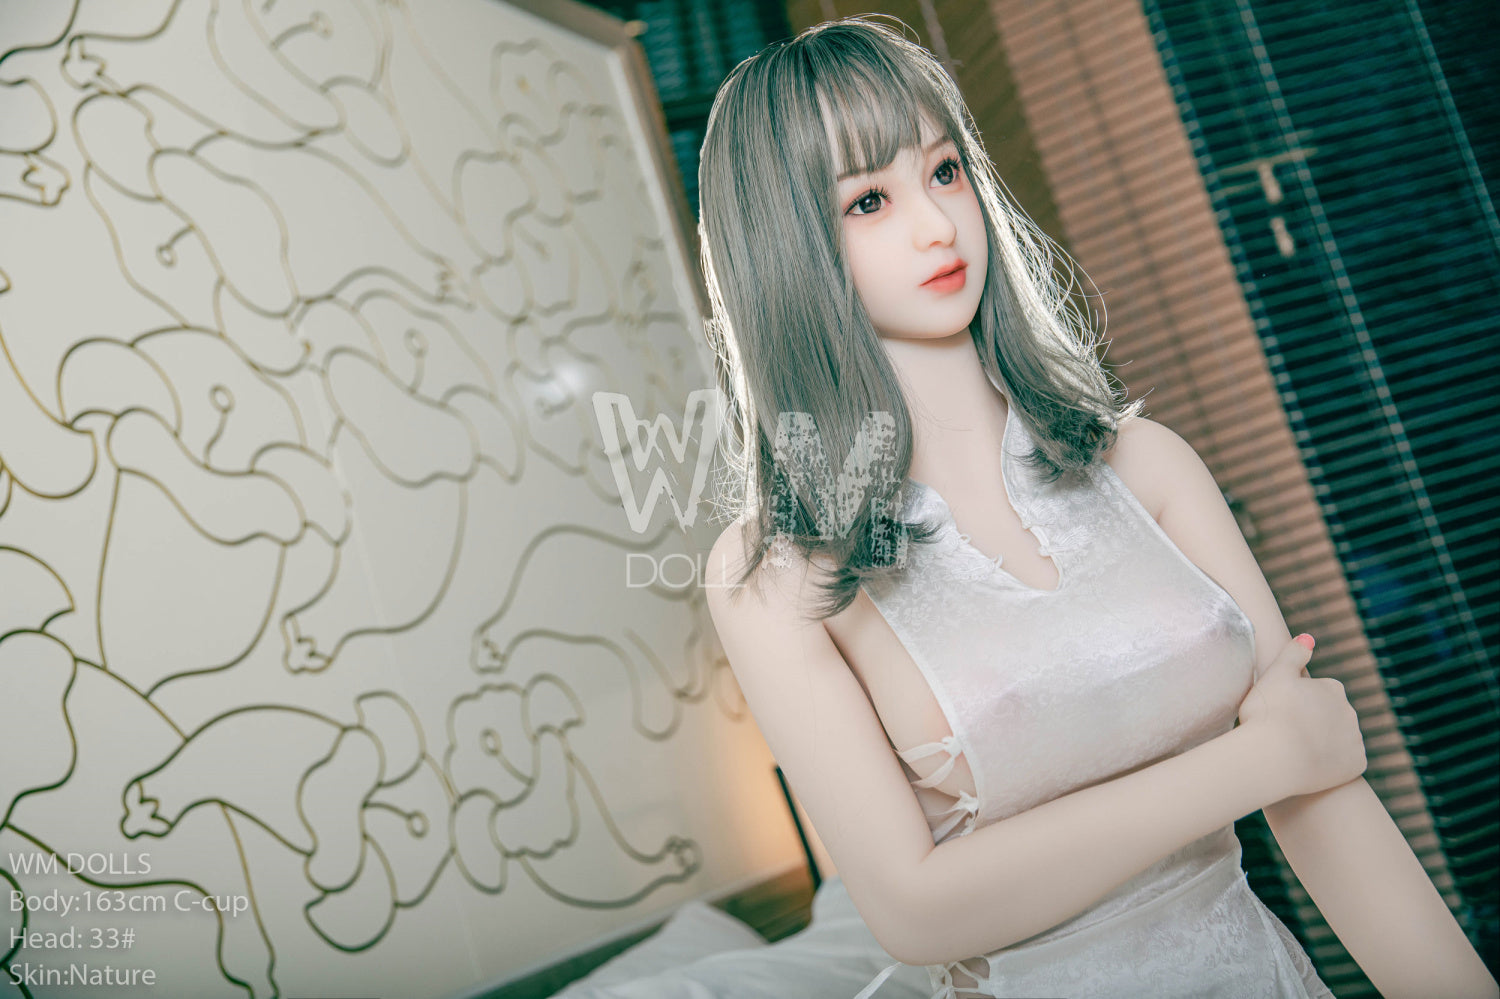 WM Doll 163 cm C TPE - Arya | Buy Sex Dolls at DOLLS ACTUALLY